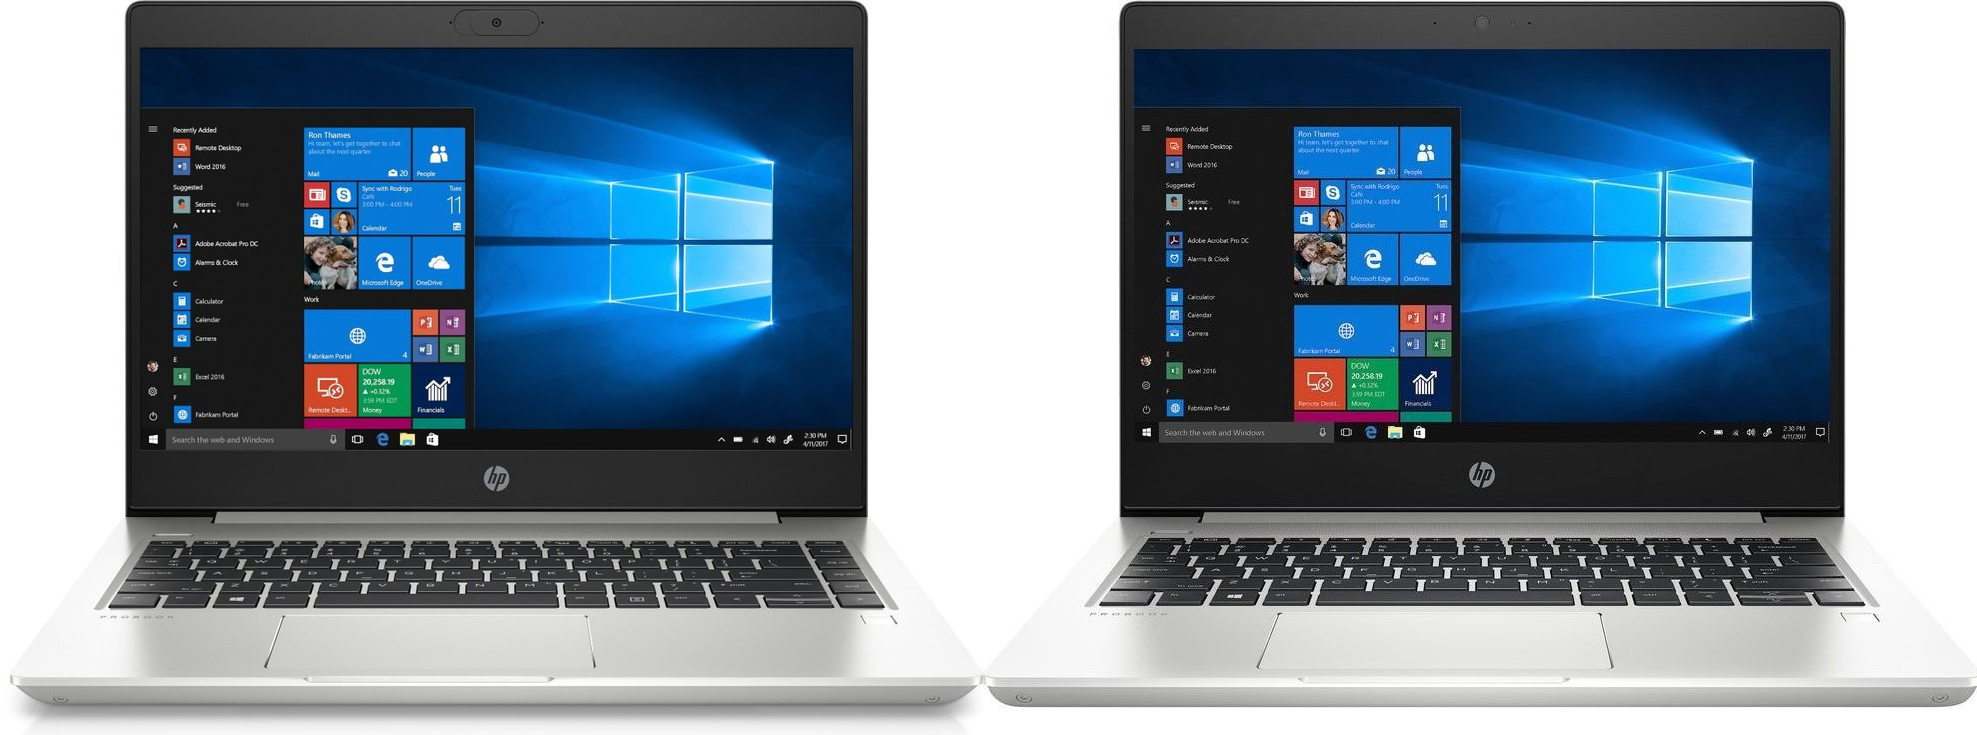 HP ProBook 430 G7 (2020) vs HP ProBook 430 G6 (2019) - the smaller